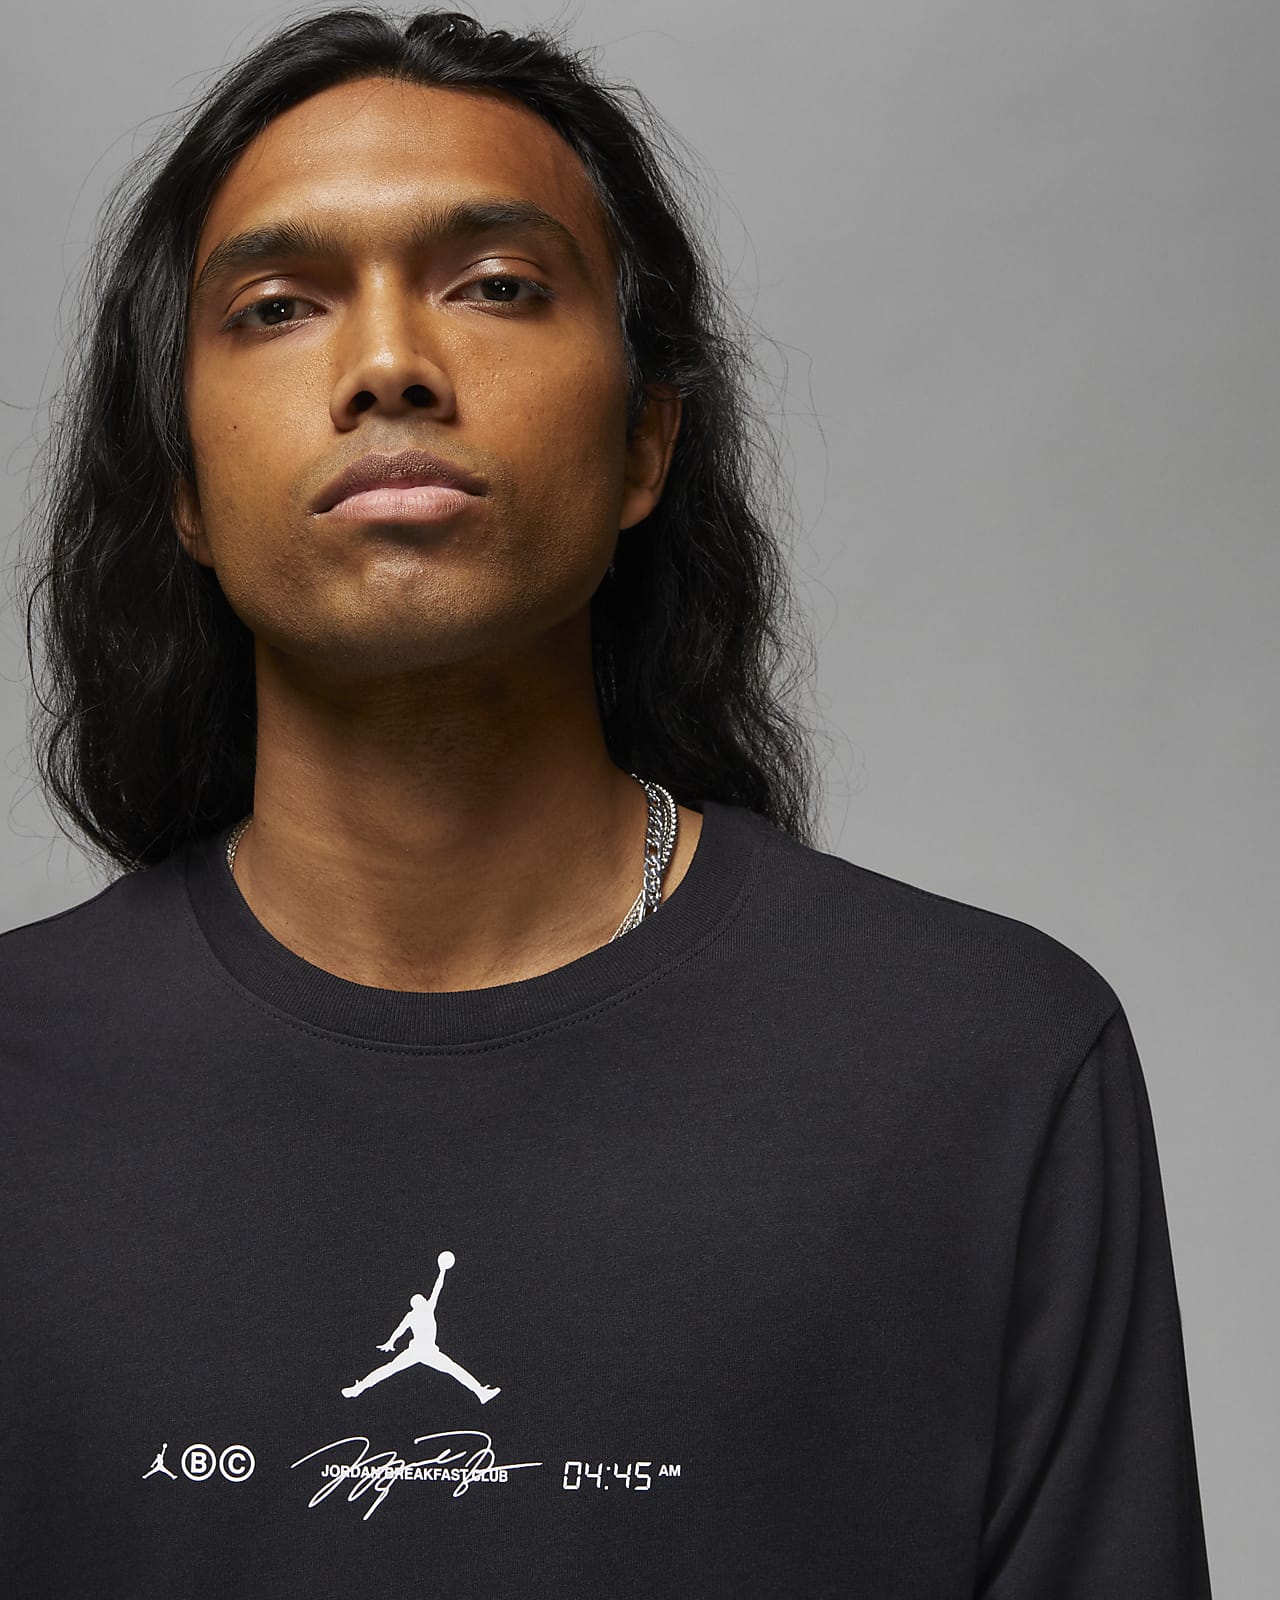 Jordan Sport Men's Graphic T-Shirt. Nike SG